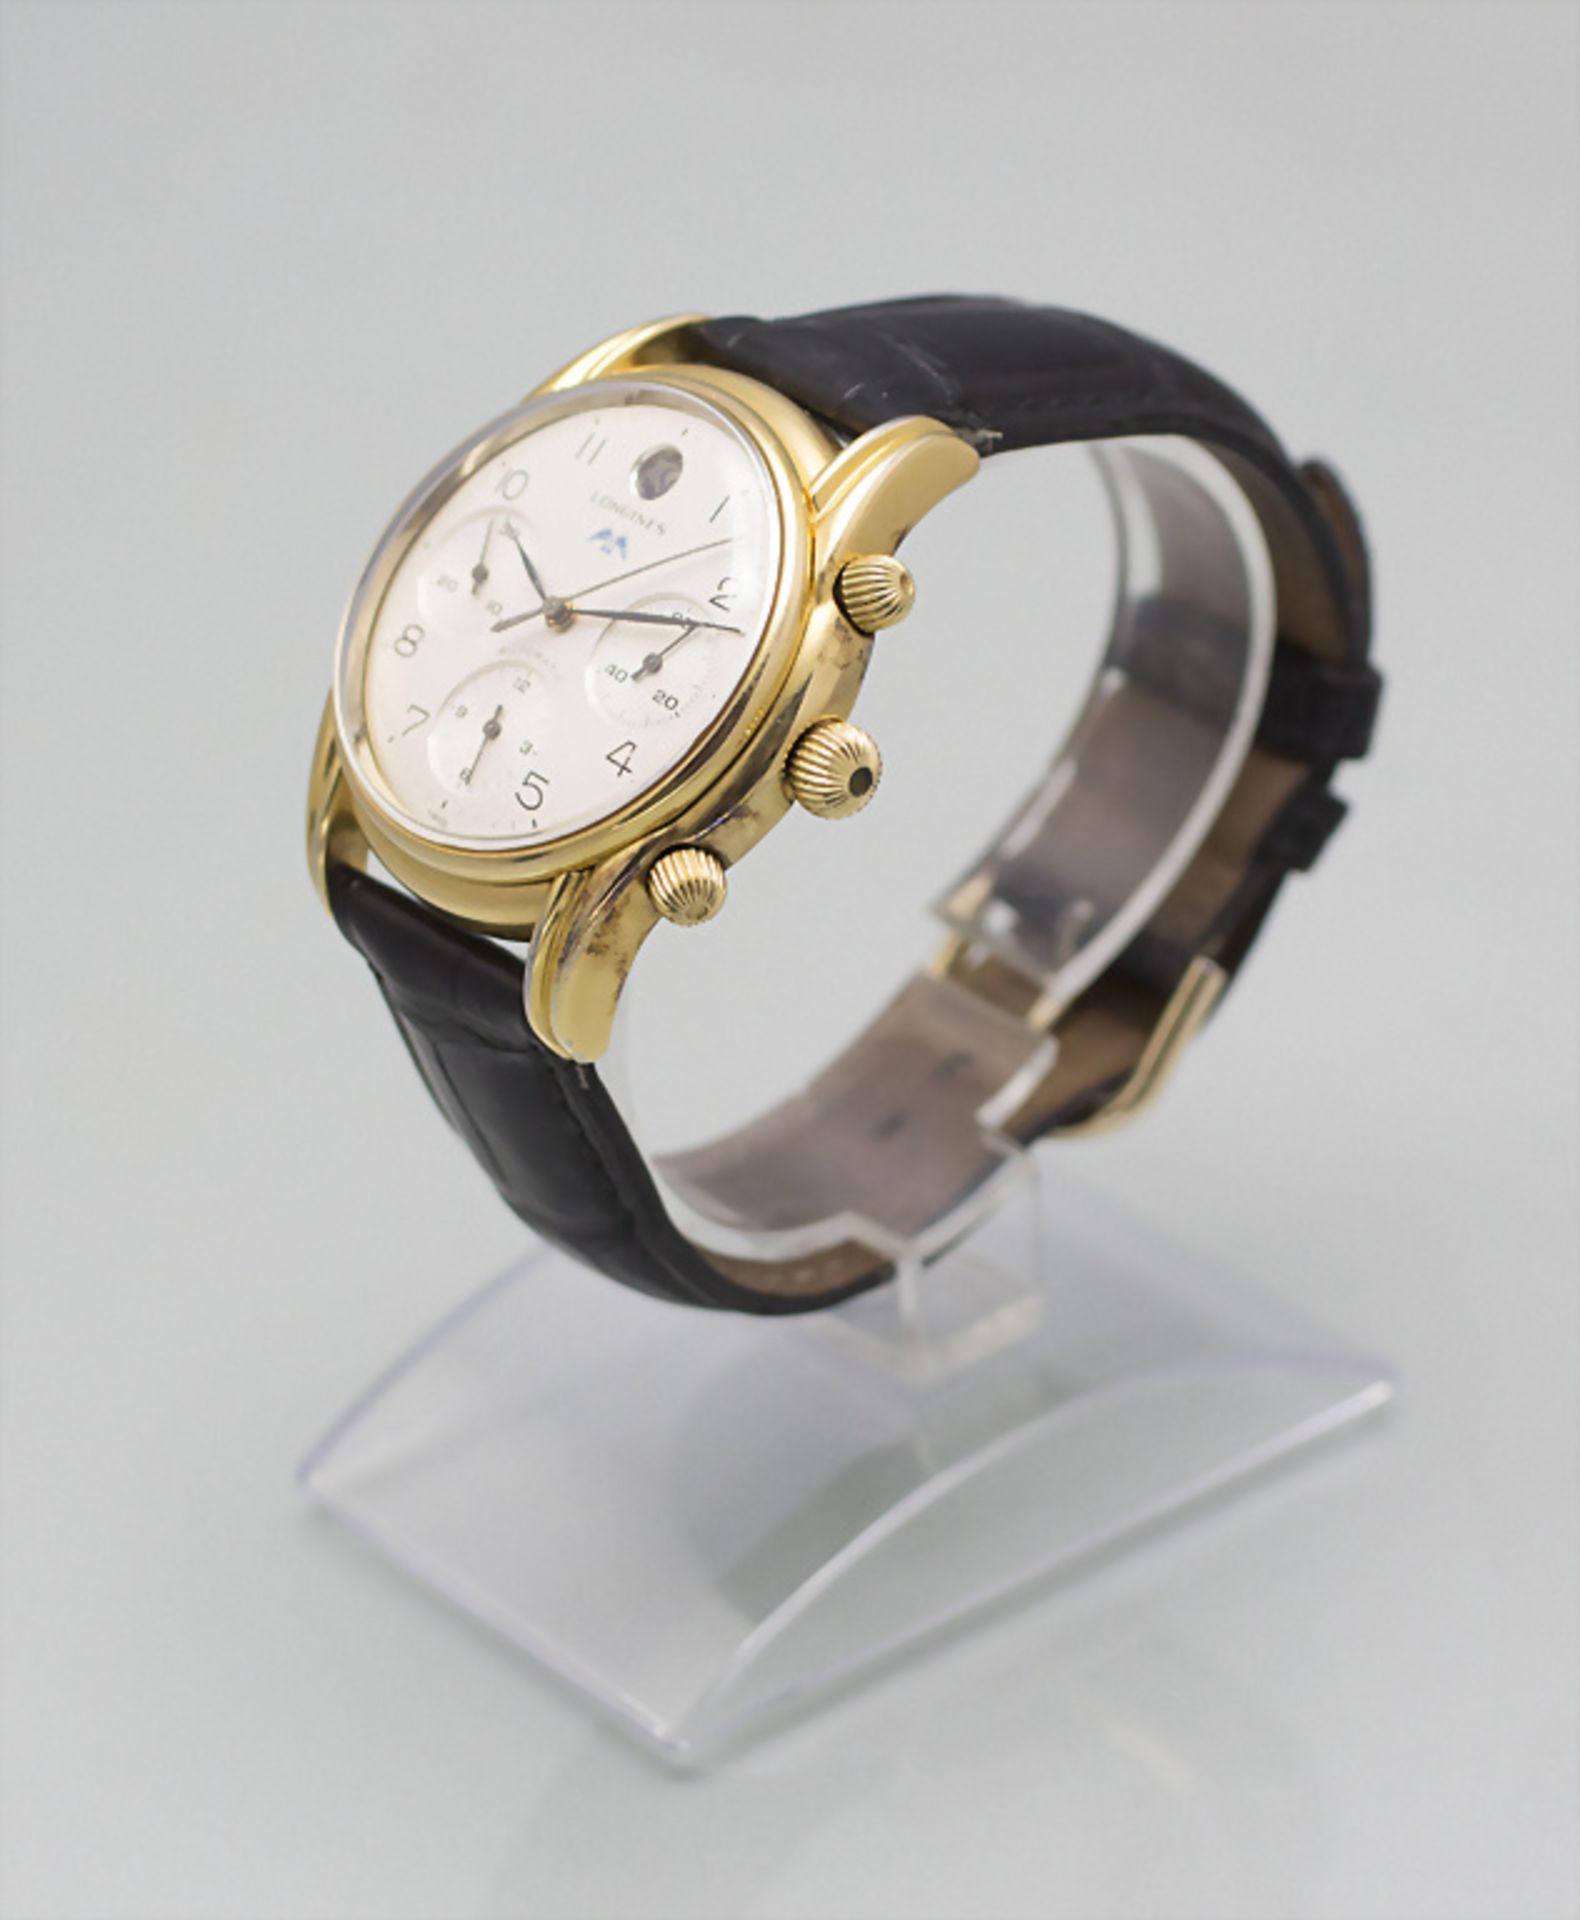 HAU Chronograph / A men's watch, Longines, um 1995 - Image 3 of 3